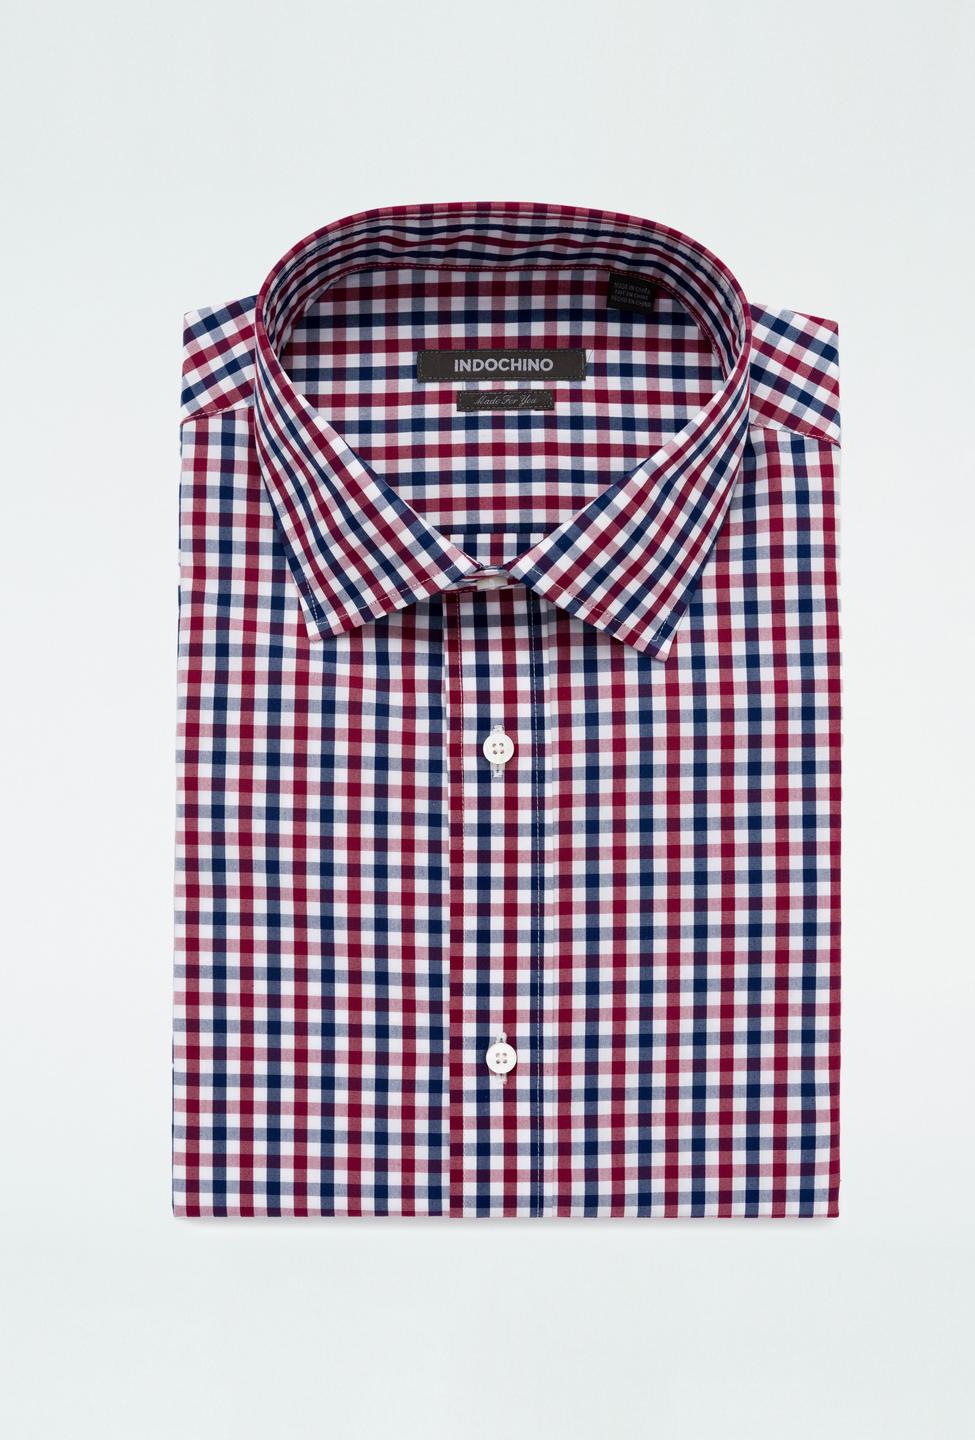 Burgundy shirt - Leston Checked Design from Seasonal Indochino Collection